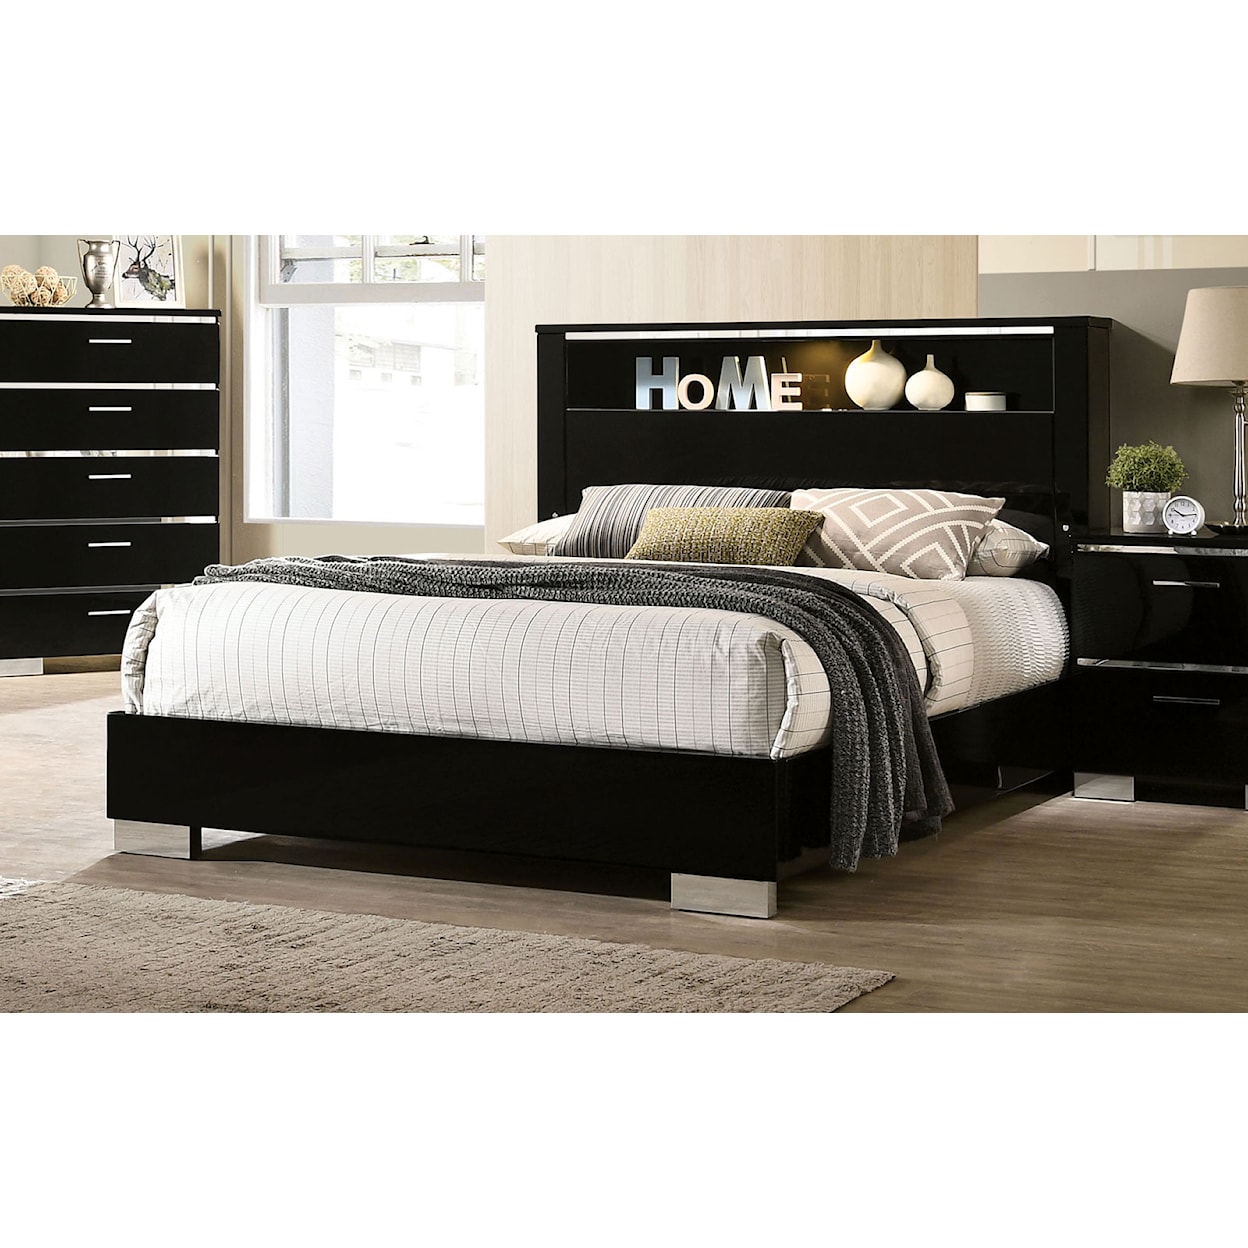 Furniture of America Carlie California King Bed